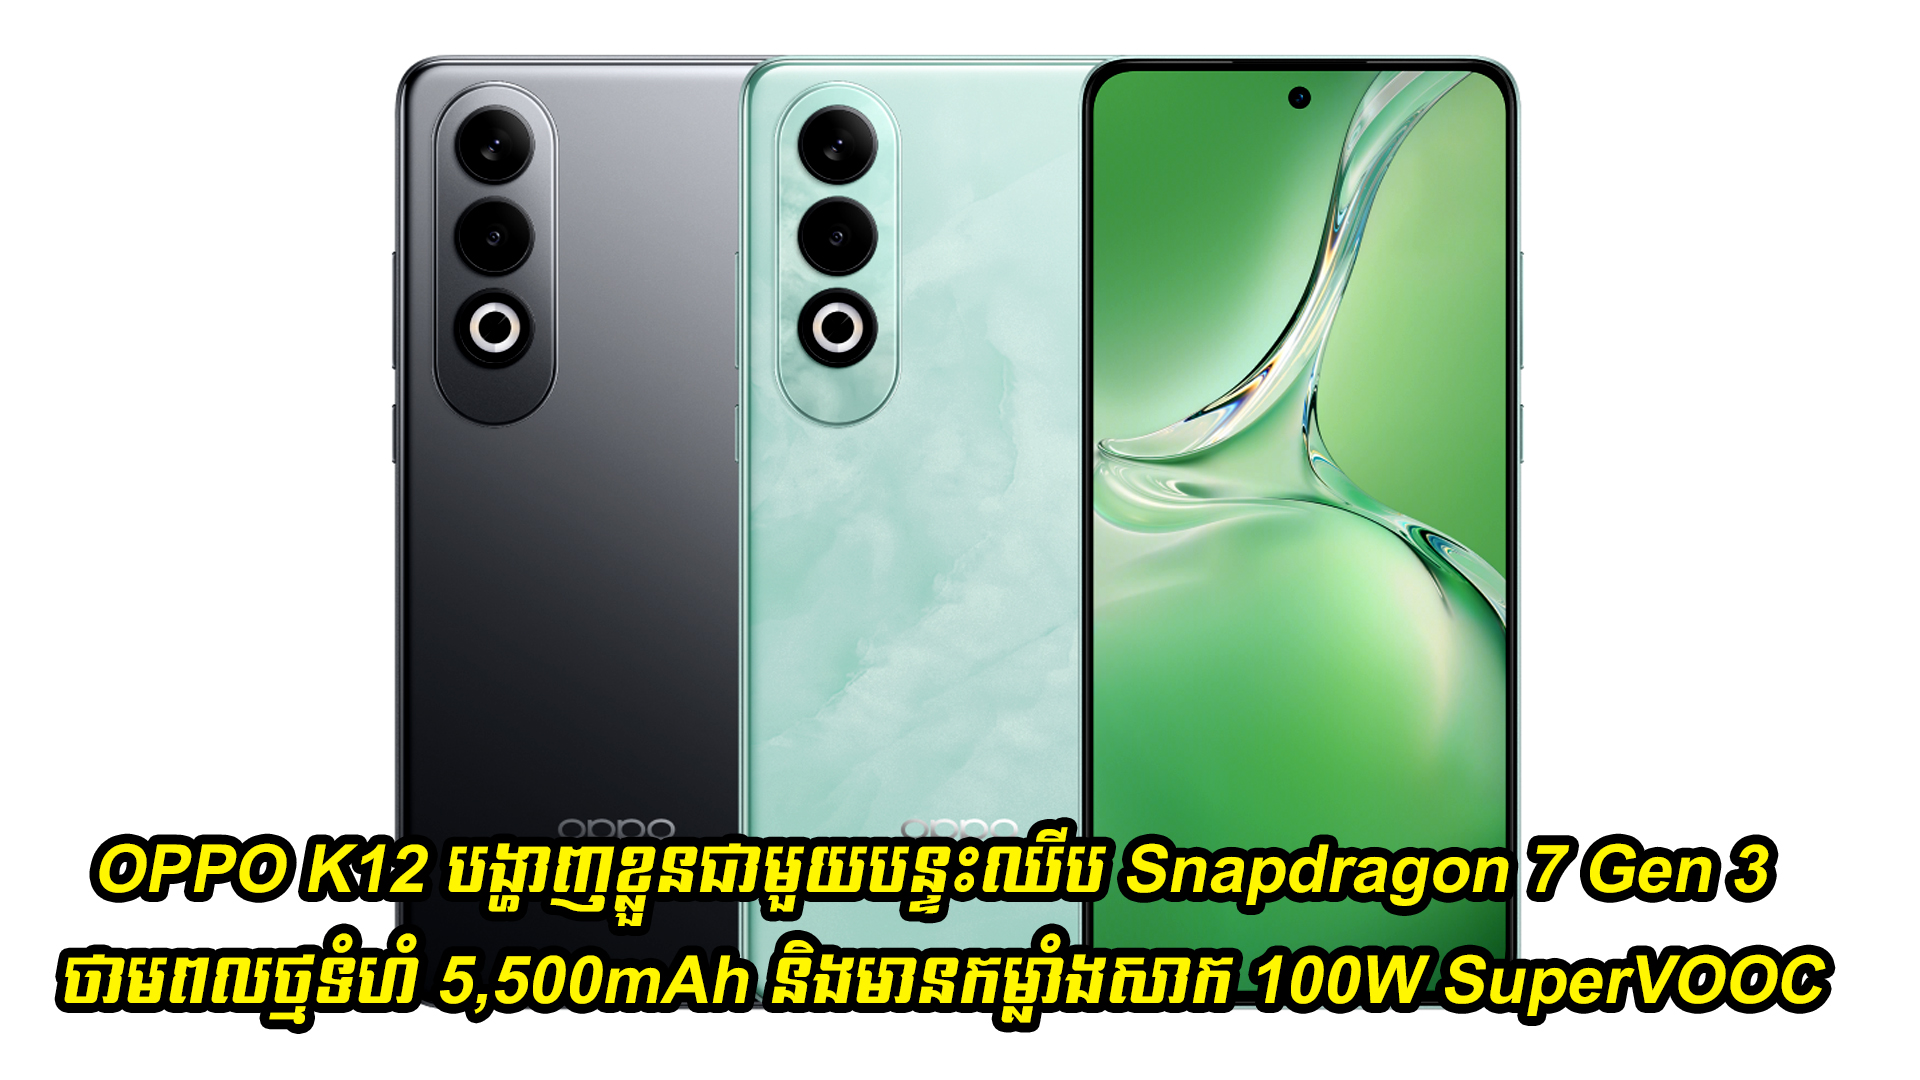 OPPO K12 បង្ហាញខ្លួនជាមួយឈីប Snapdragon 7 Gen 3 ថាមពលថ្មទំហំ 5,500mAh និងមានកម្លាំងសាក 100W SuperVOOC 